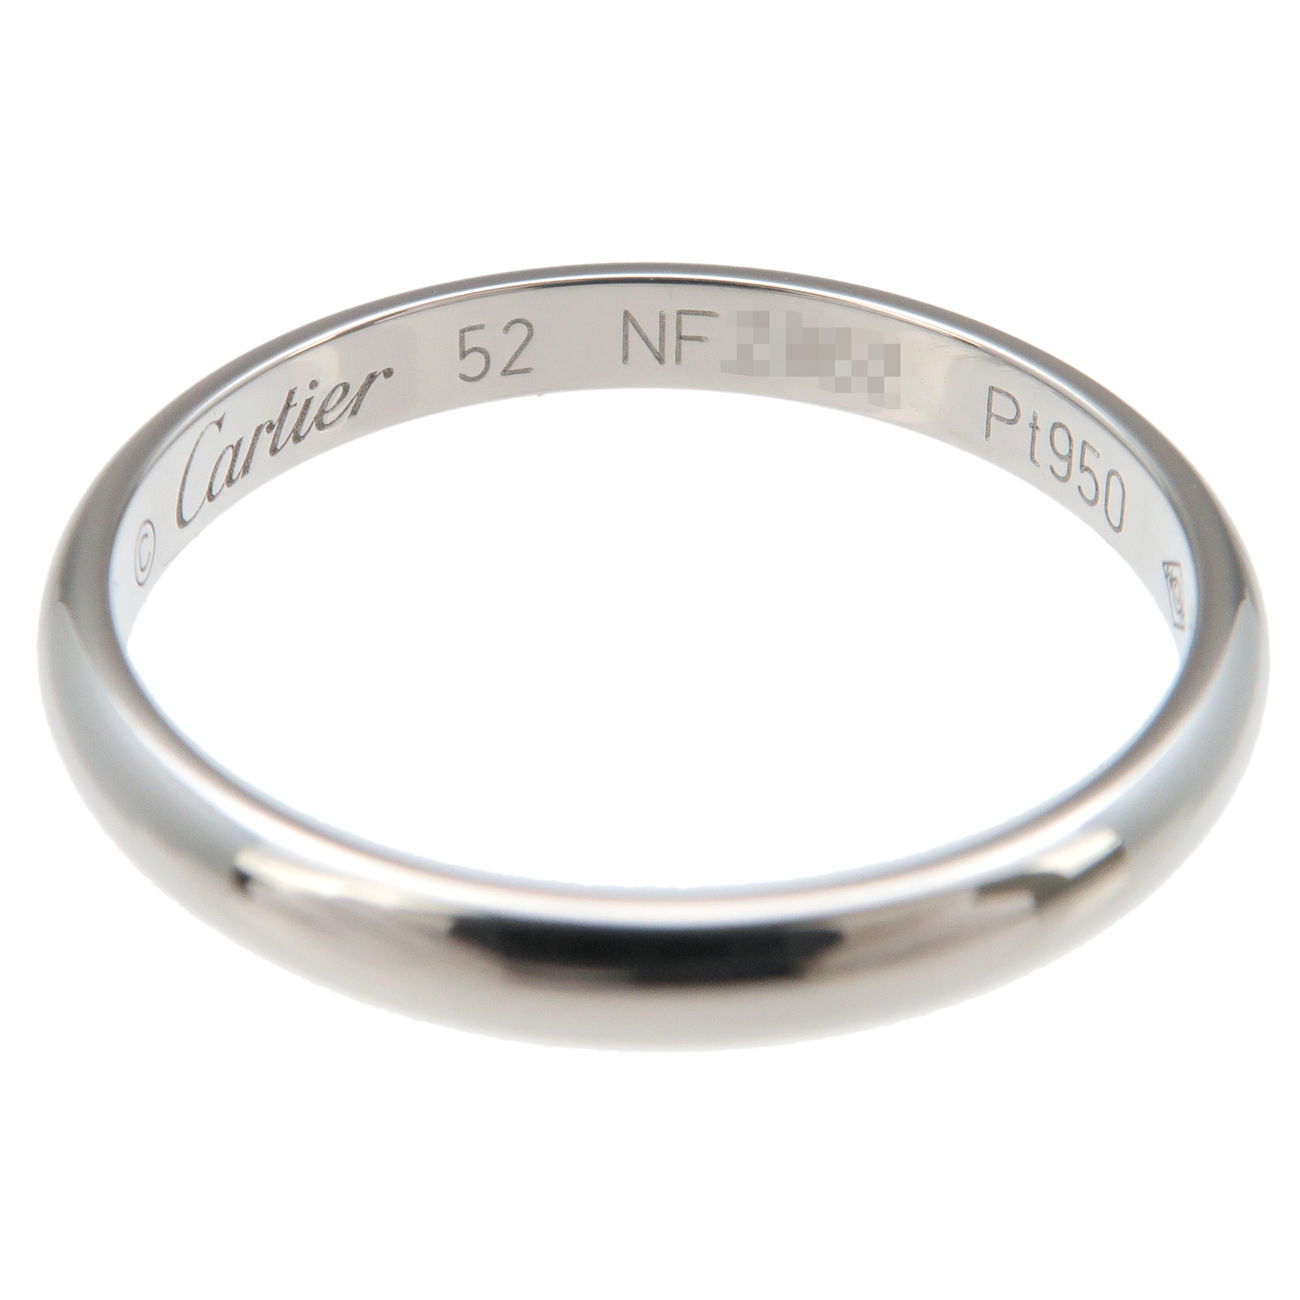 Cartier Wedding Ring PT950 Platinum #52 US6 HK13 EU52